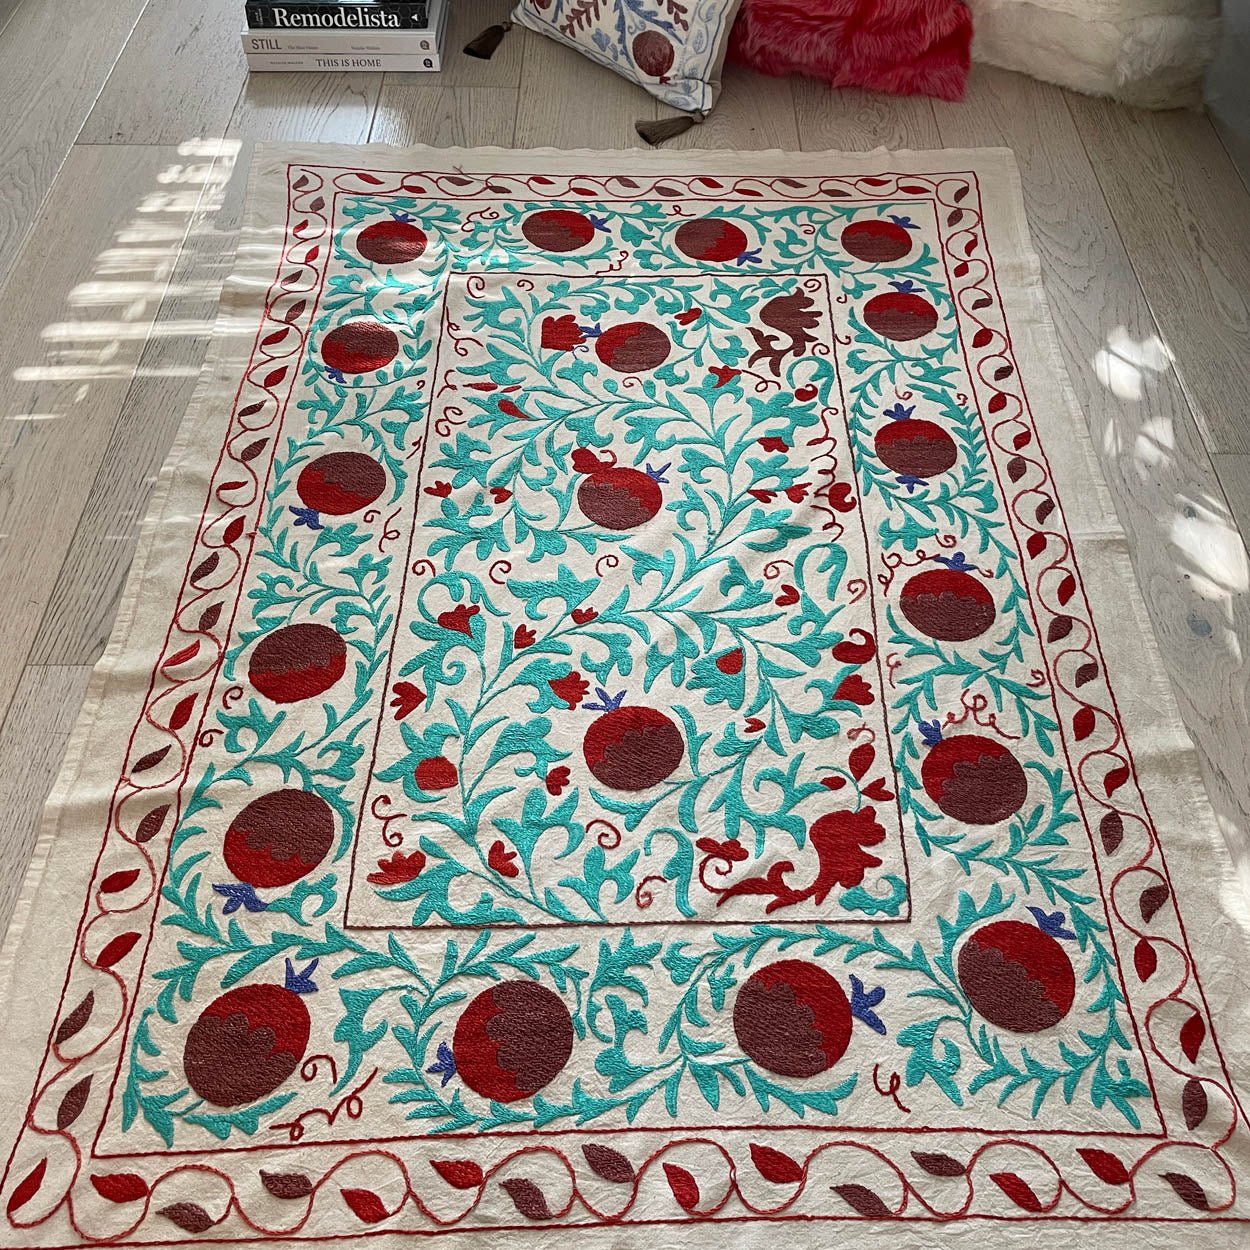 Uzbeki Suzani Hand Embroidered Textile Wall Hanging | Home Décor | Throw | 108cm x 150cm SUZ220518009 - Wildash London